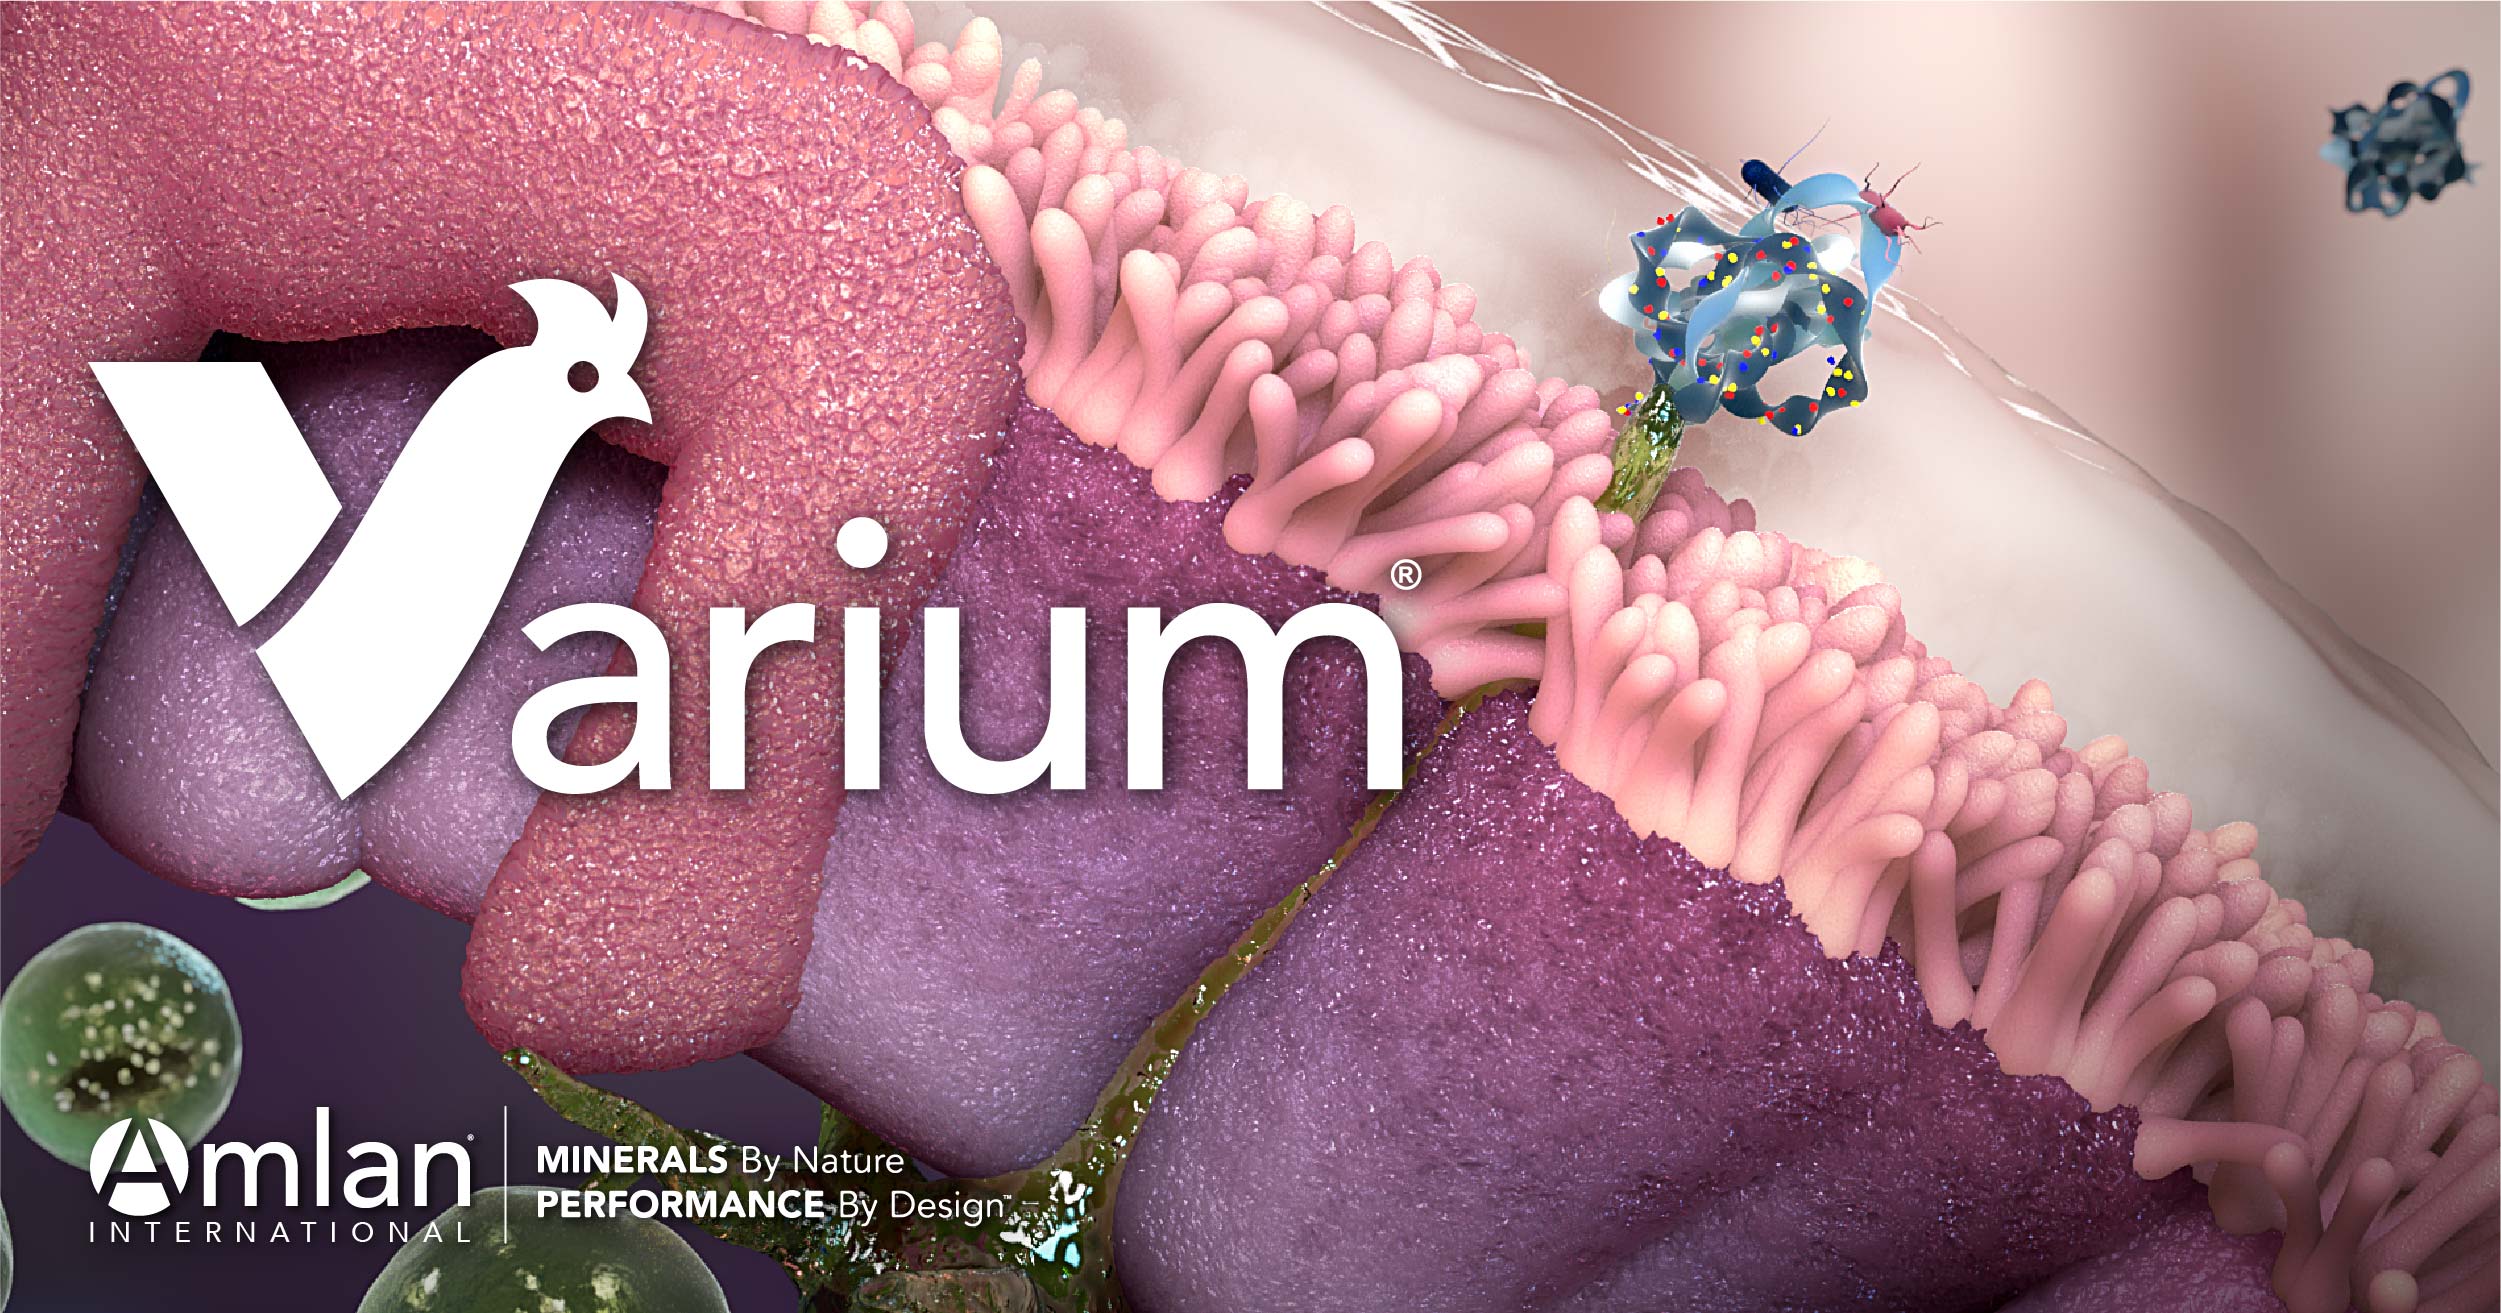 Blog de productos Varium